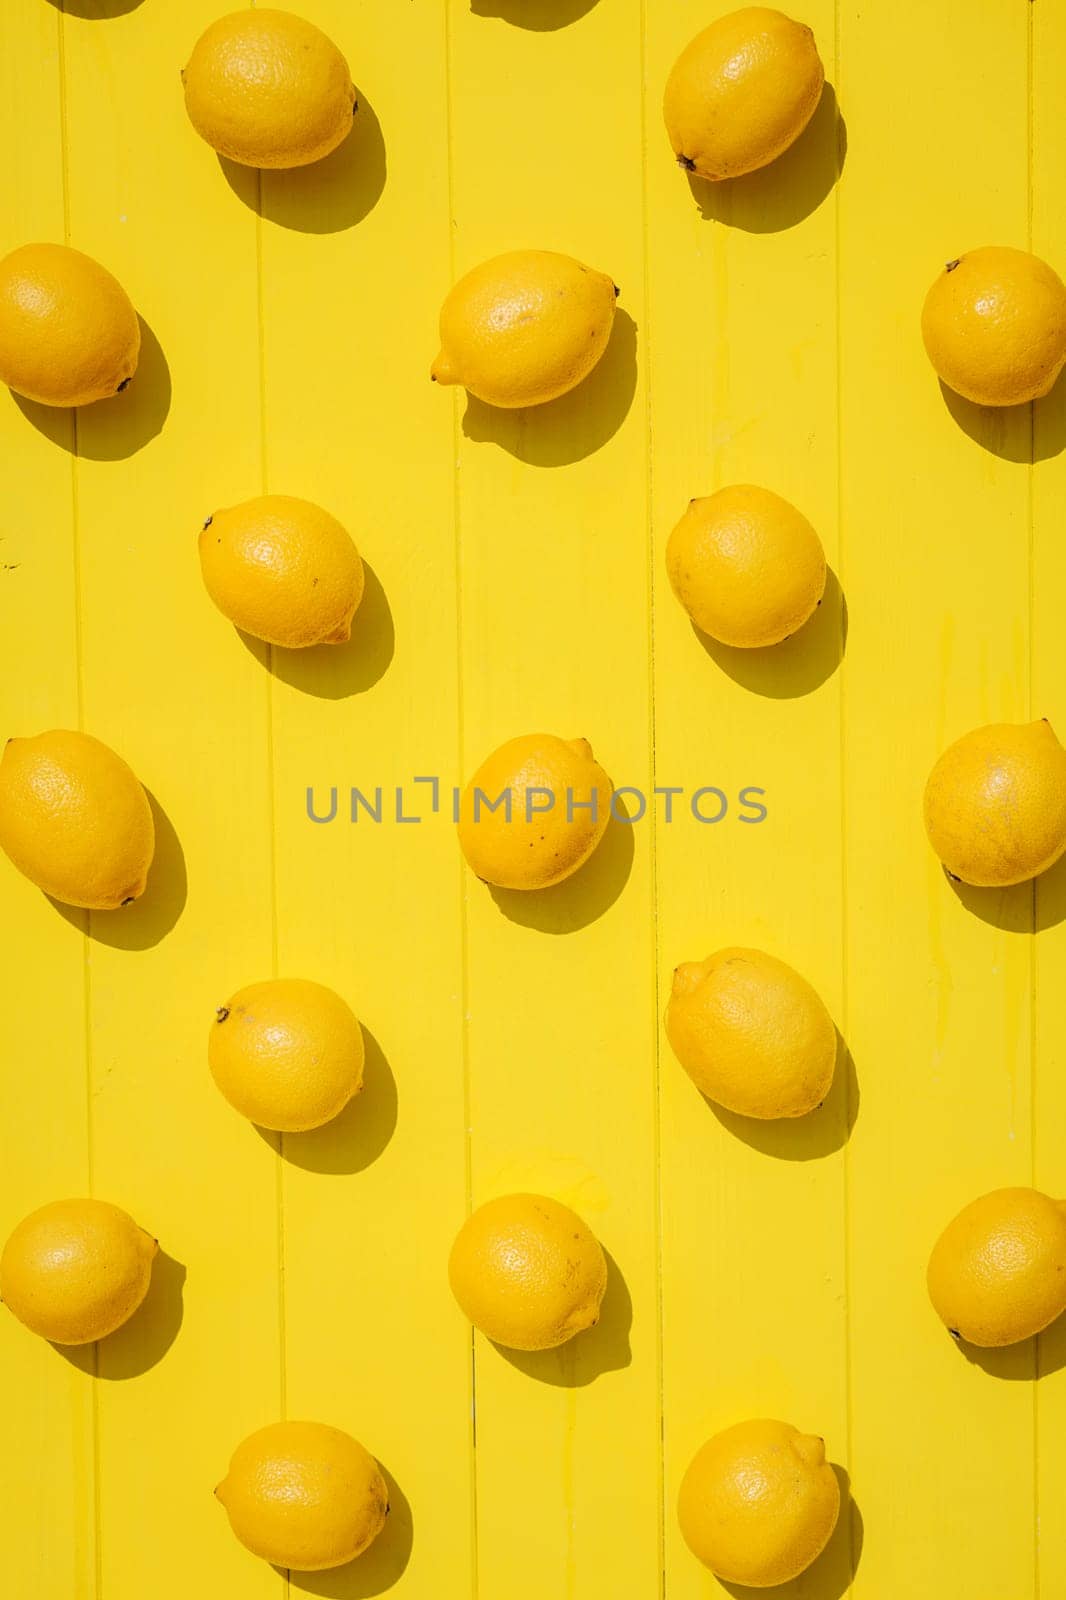 Many lemons on yellow background. by Ladouski